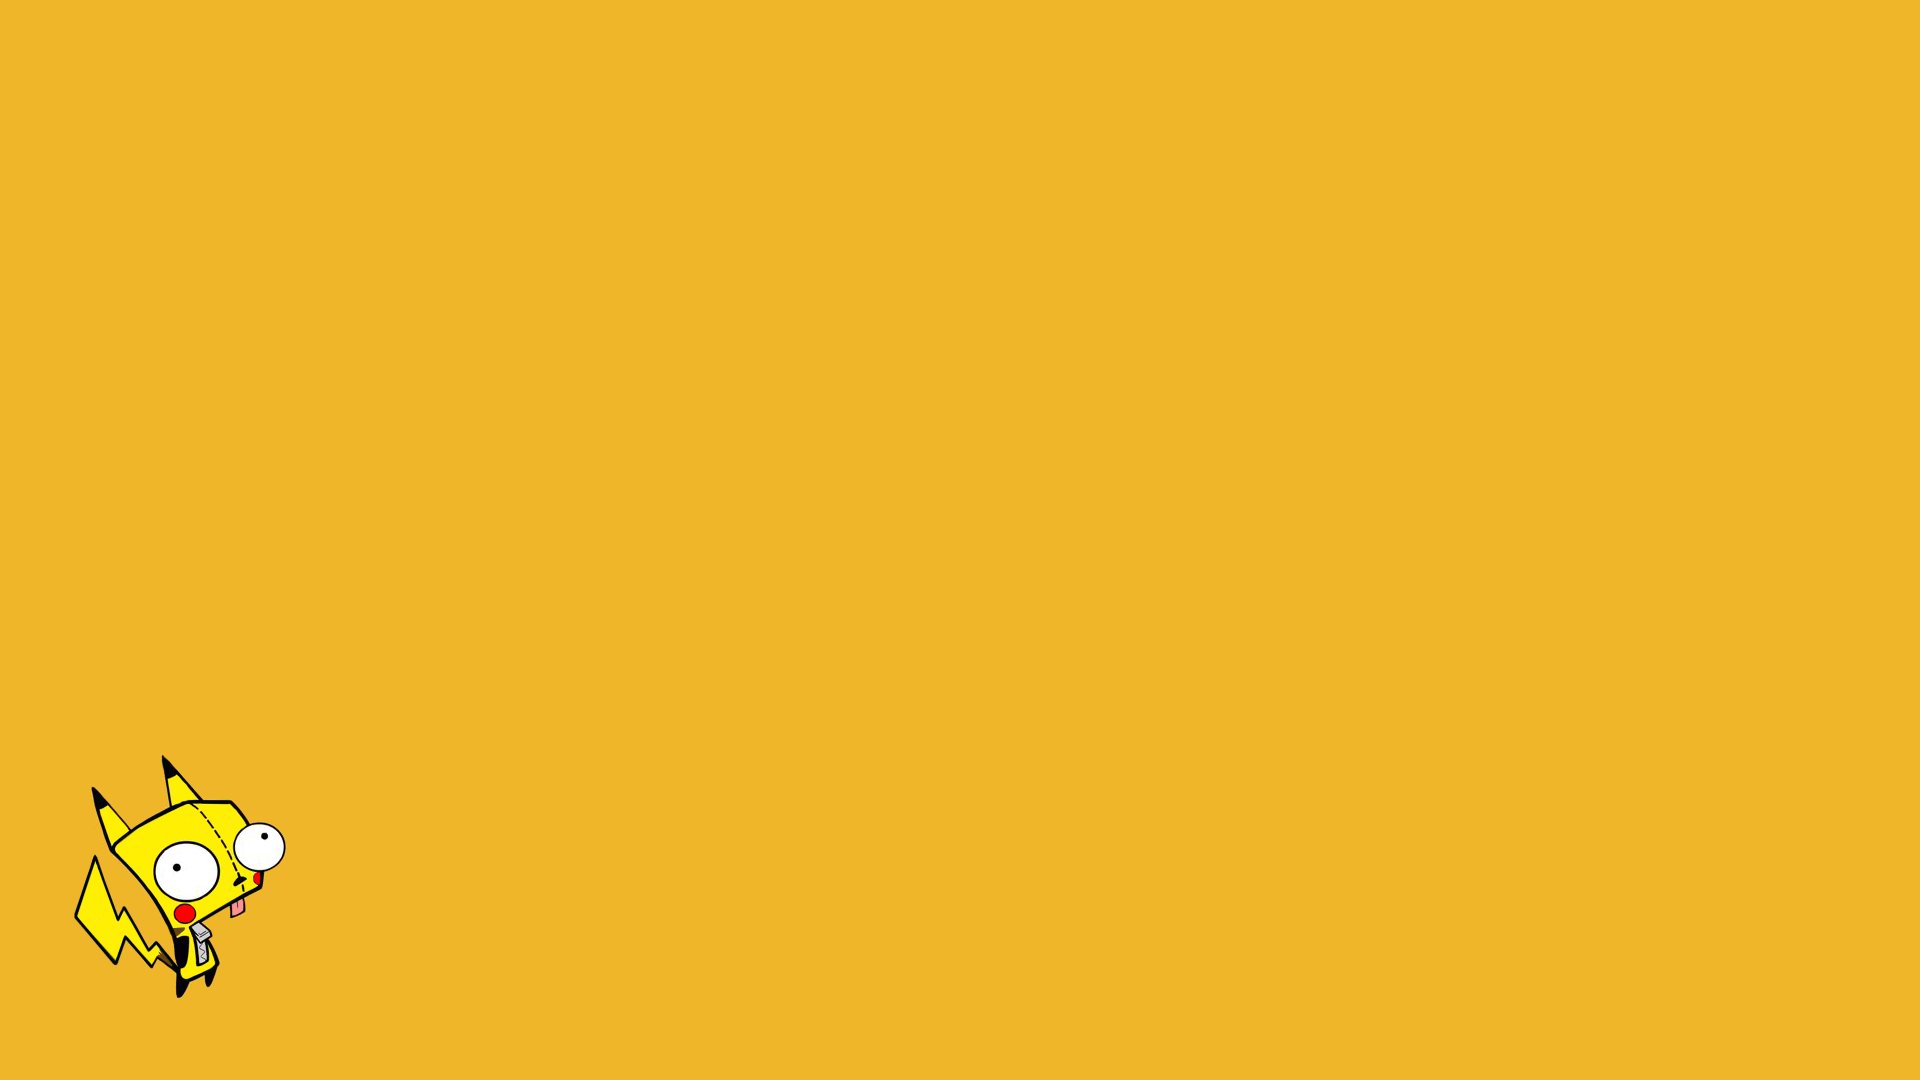 Wallpaper : 1920x1080 px, minimalistic, Pikachu, pokemon, simple, simplistic 1920x1080